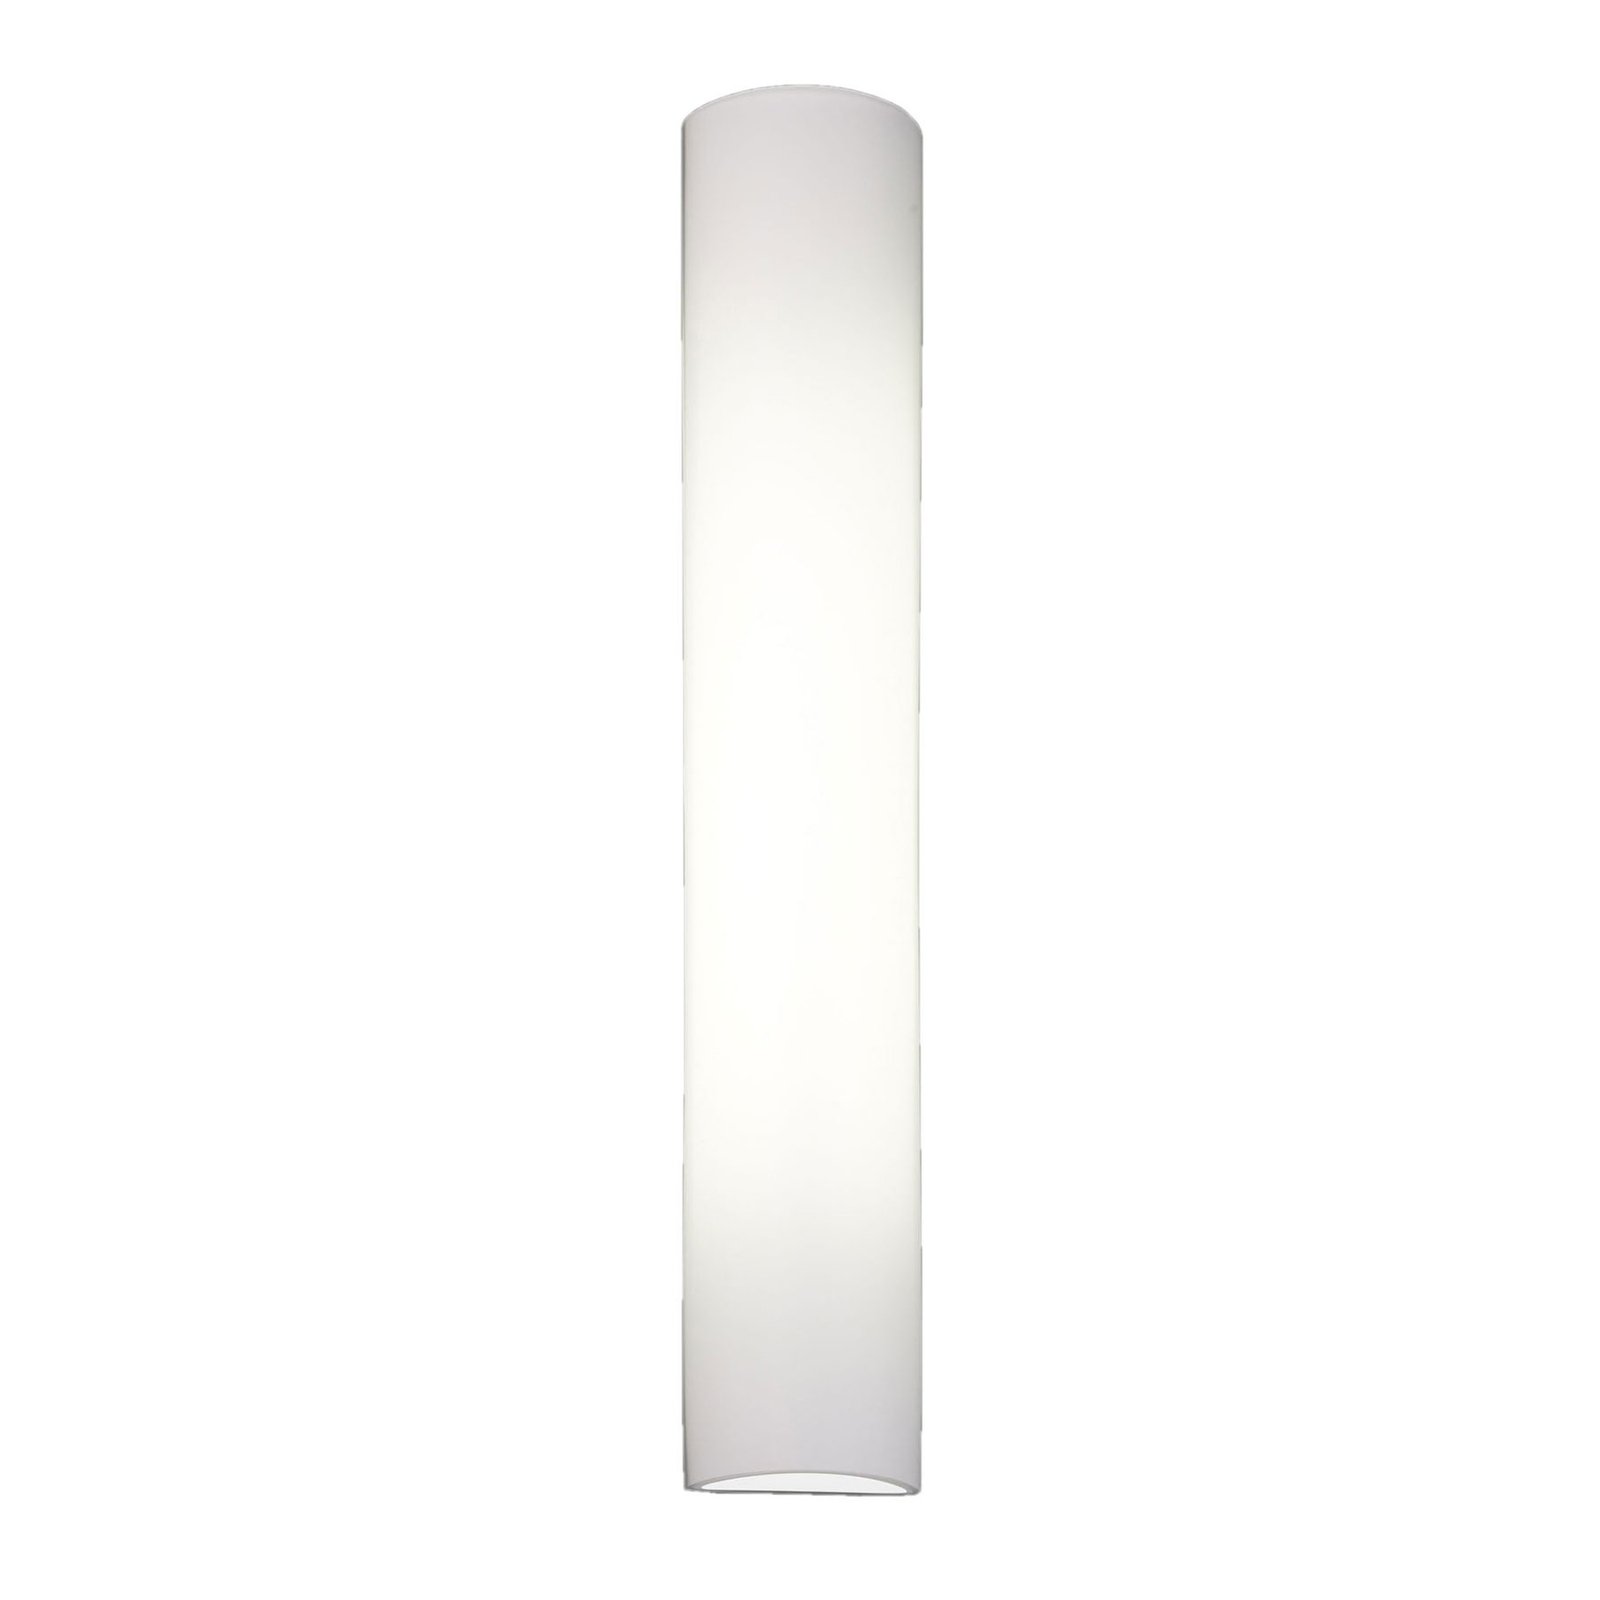 BANKAMP Cromo LED-vägglampa av glas, höjd 40 cm